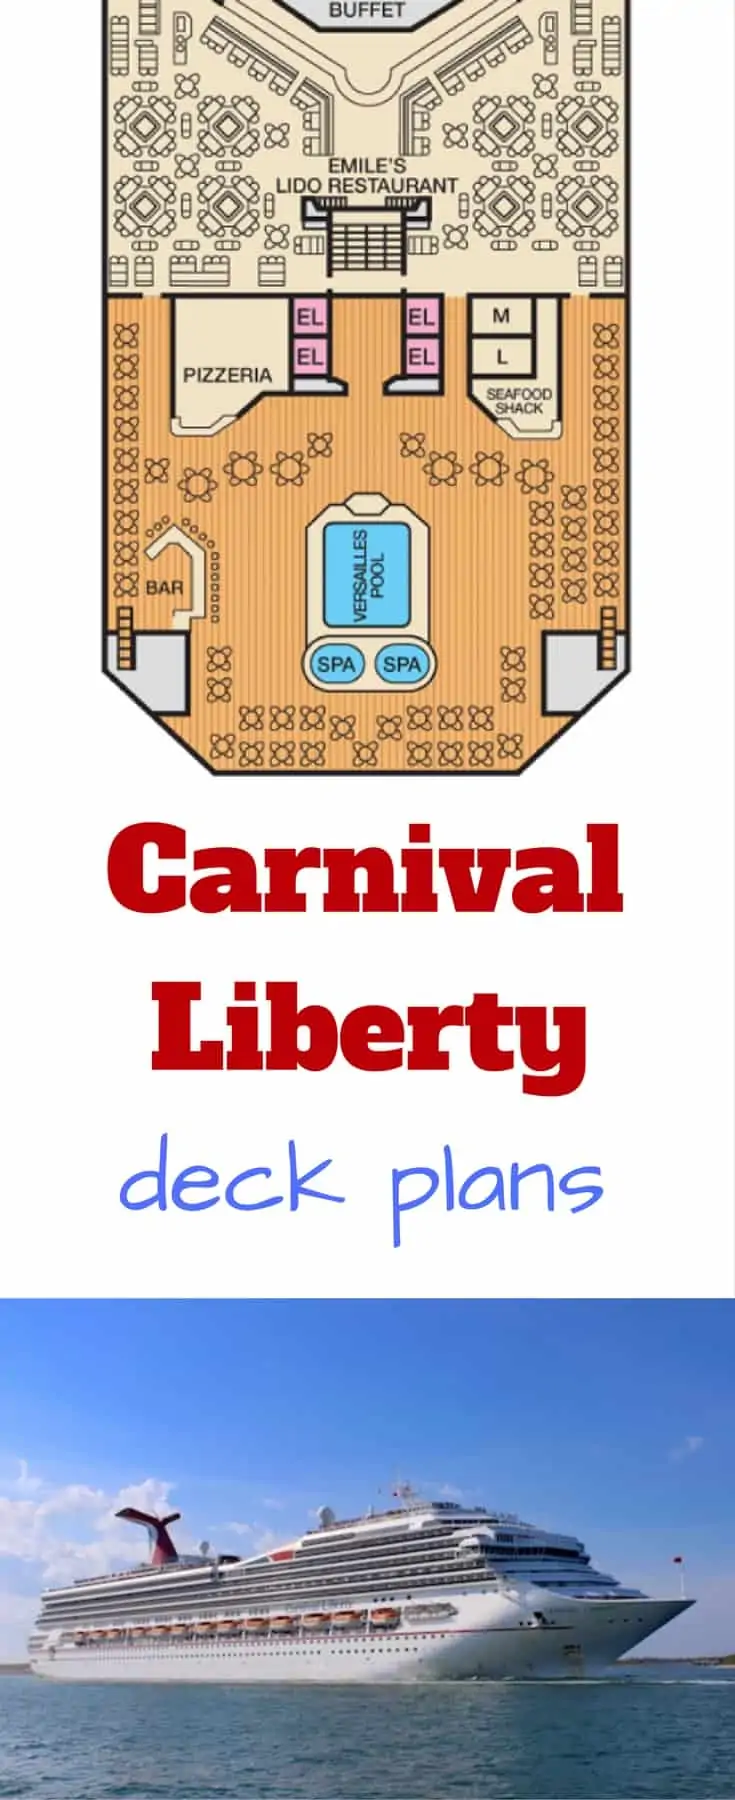 Carnival Liberty Deck Plans